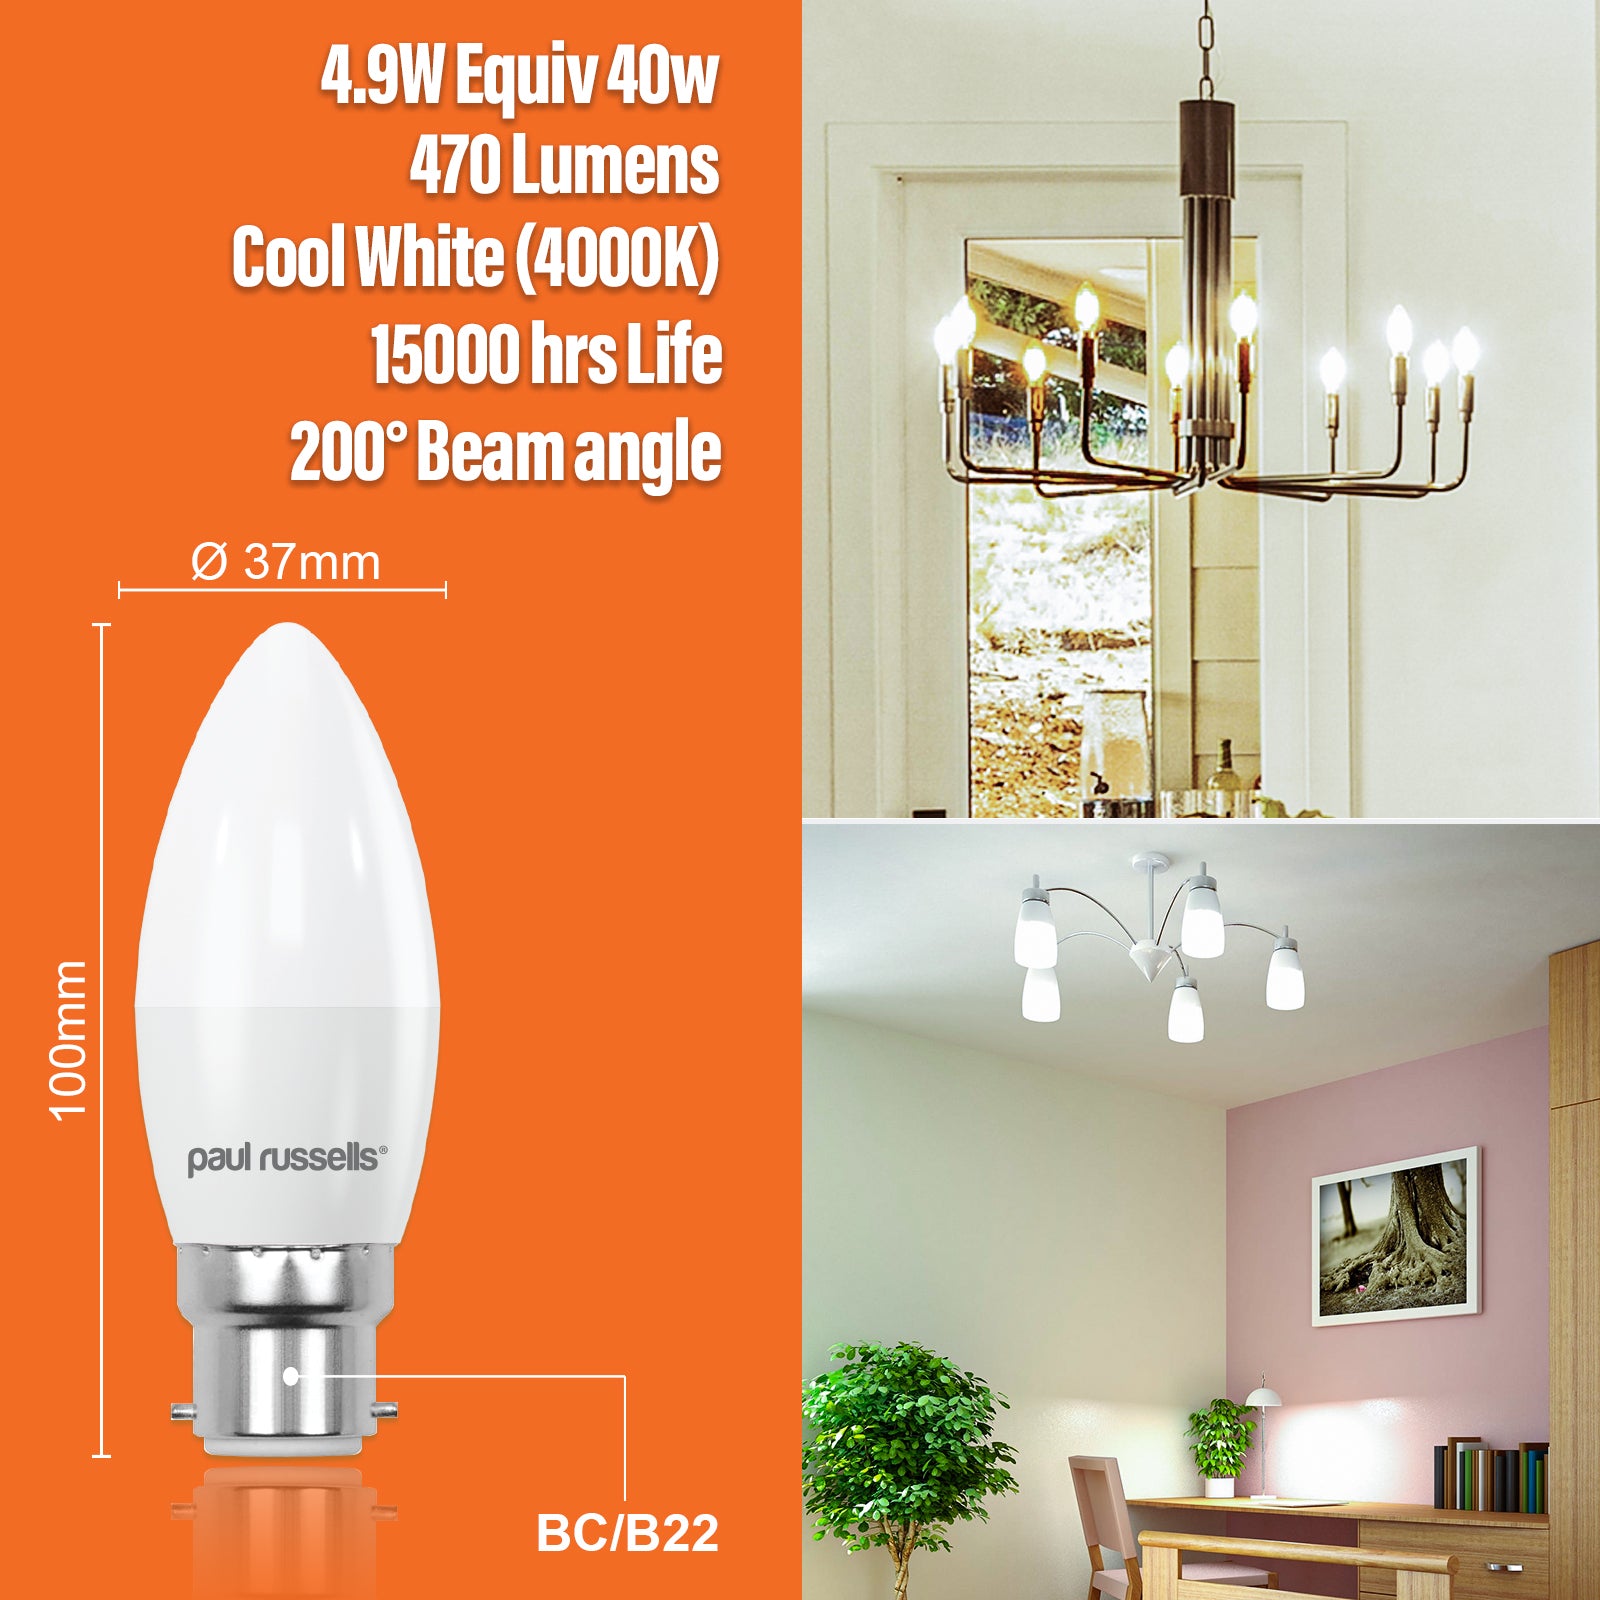 LED Candle 4.9W (40w), BC/B22, 470 Lumens, Cool White(4000K), 240V